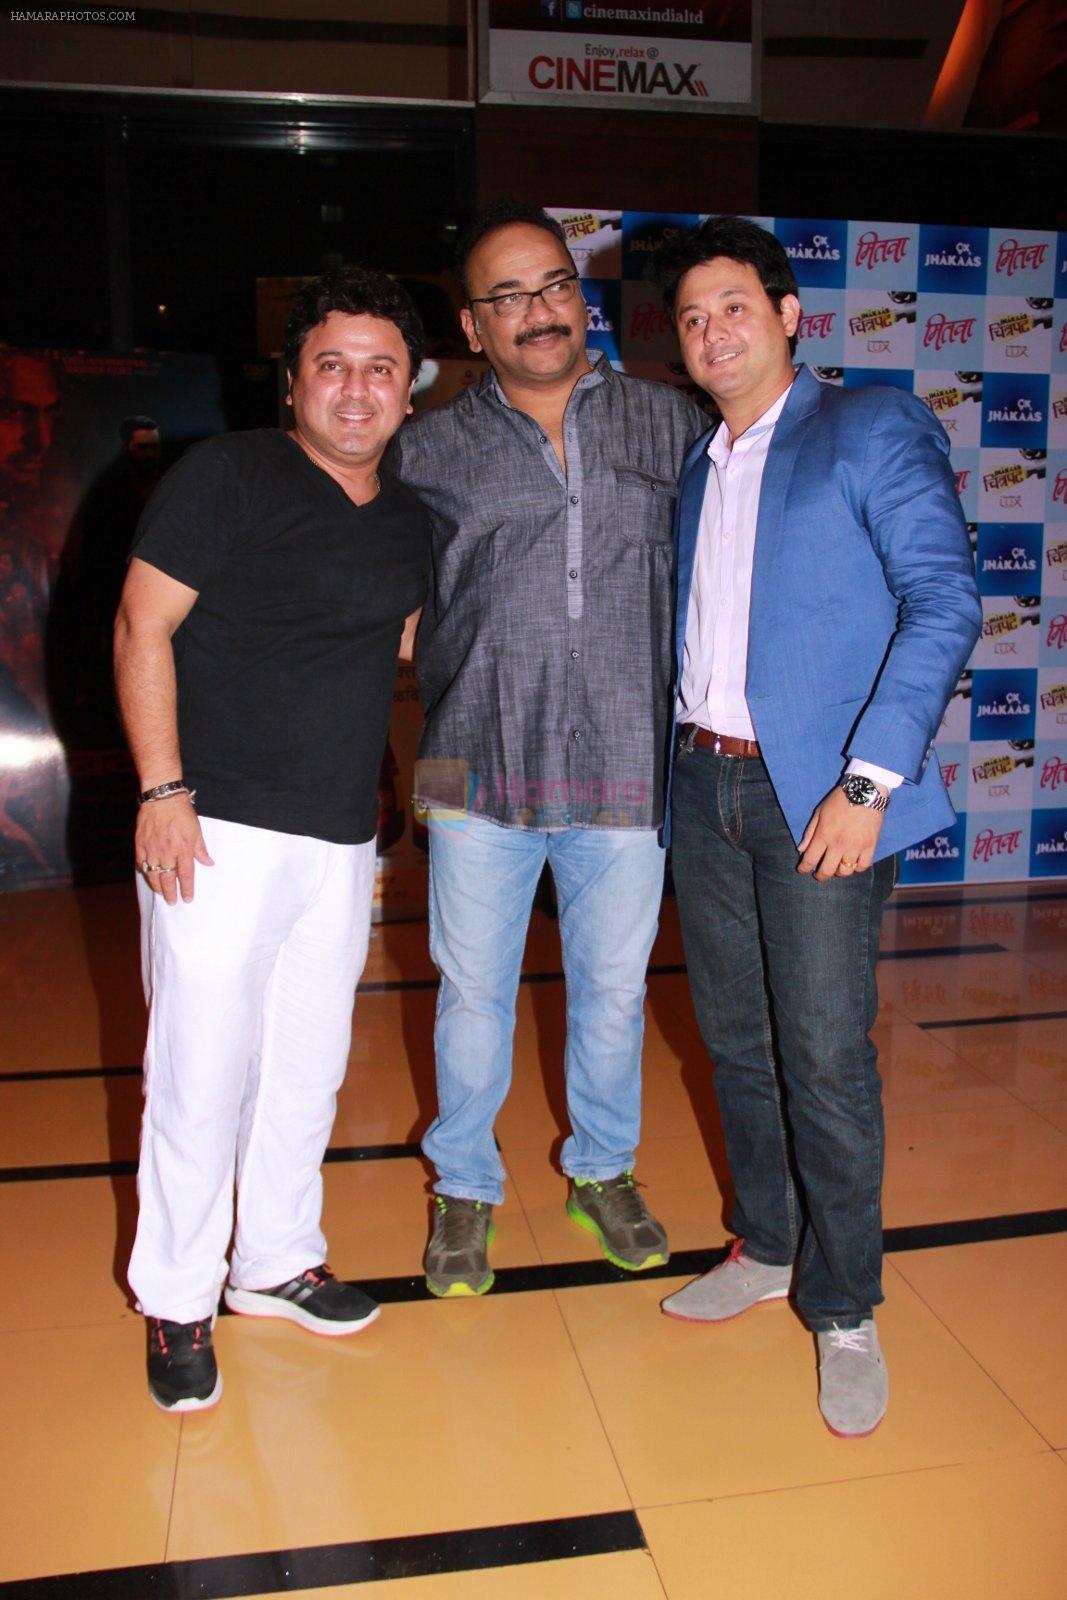 Ali Asgar, Swapnil Joshi at the Premiere of marathi movie Mitwaa on Cinema, Mumbai on 12th Feb 2015